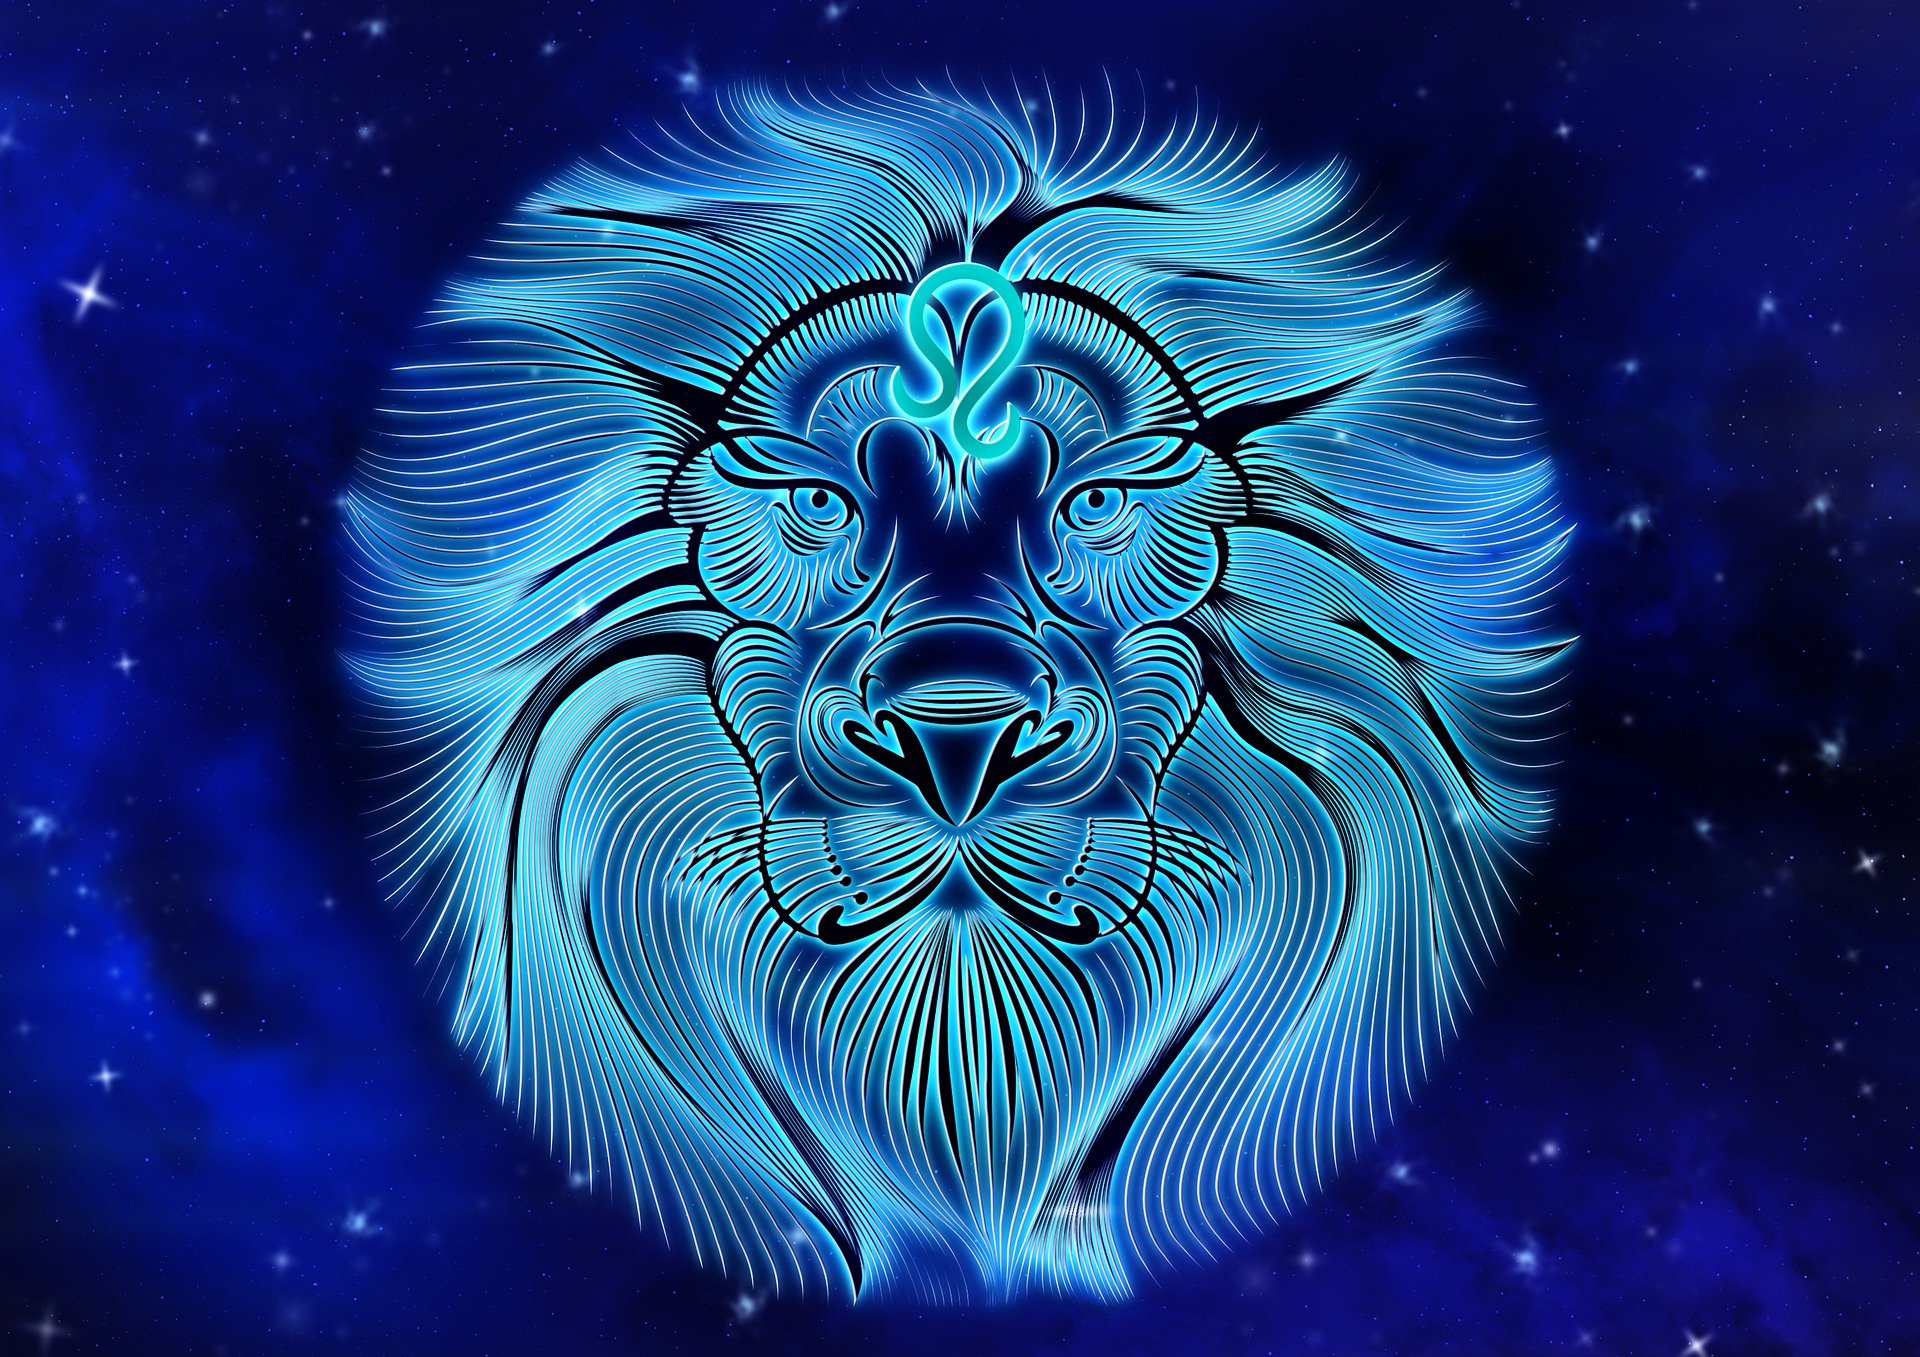 An illustration of a Leo star sign | Source: Pixabay 